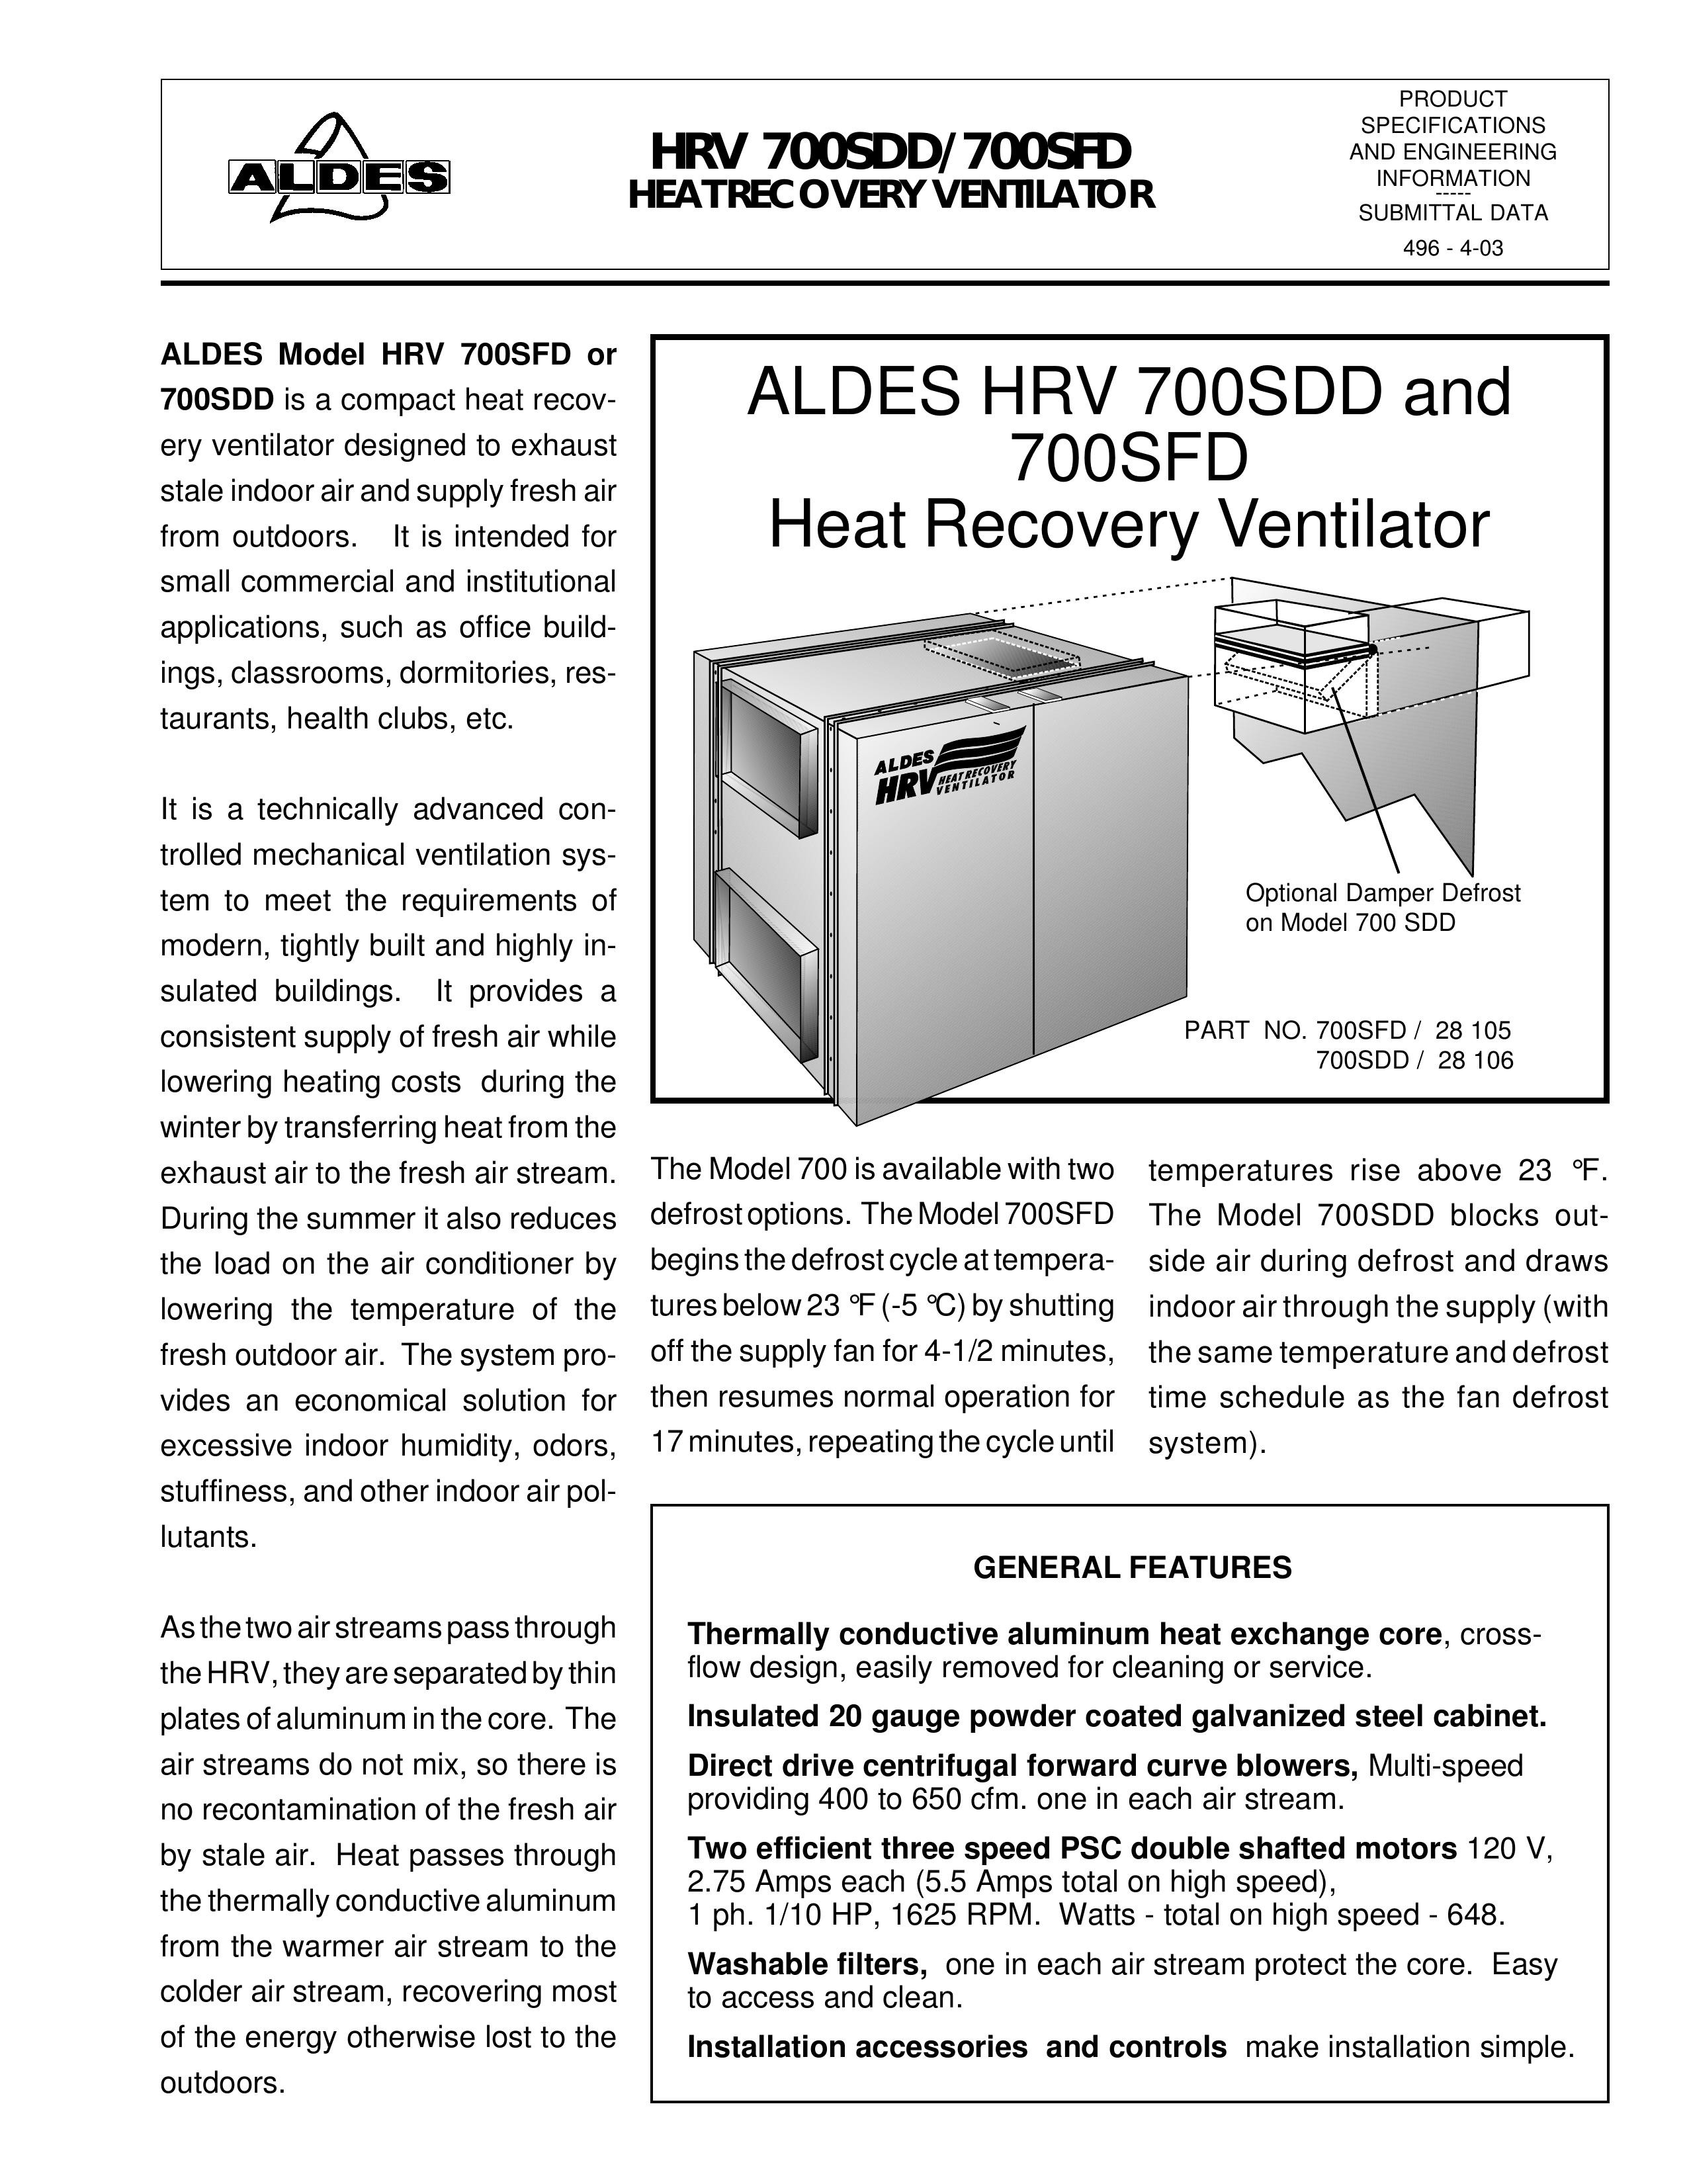 American Aldes HRV 700SFD Ventilation Hood User Manual